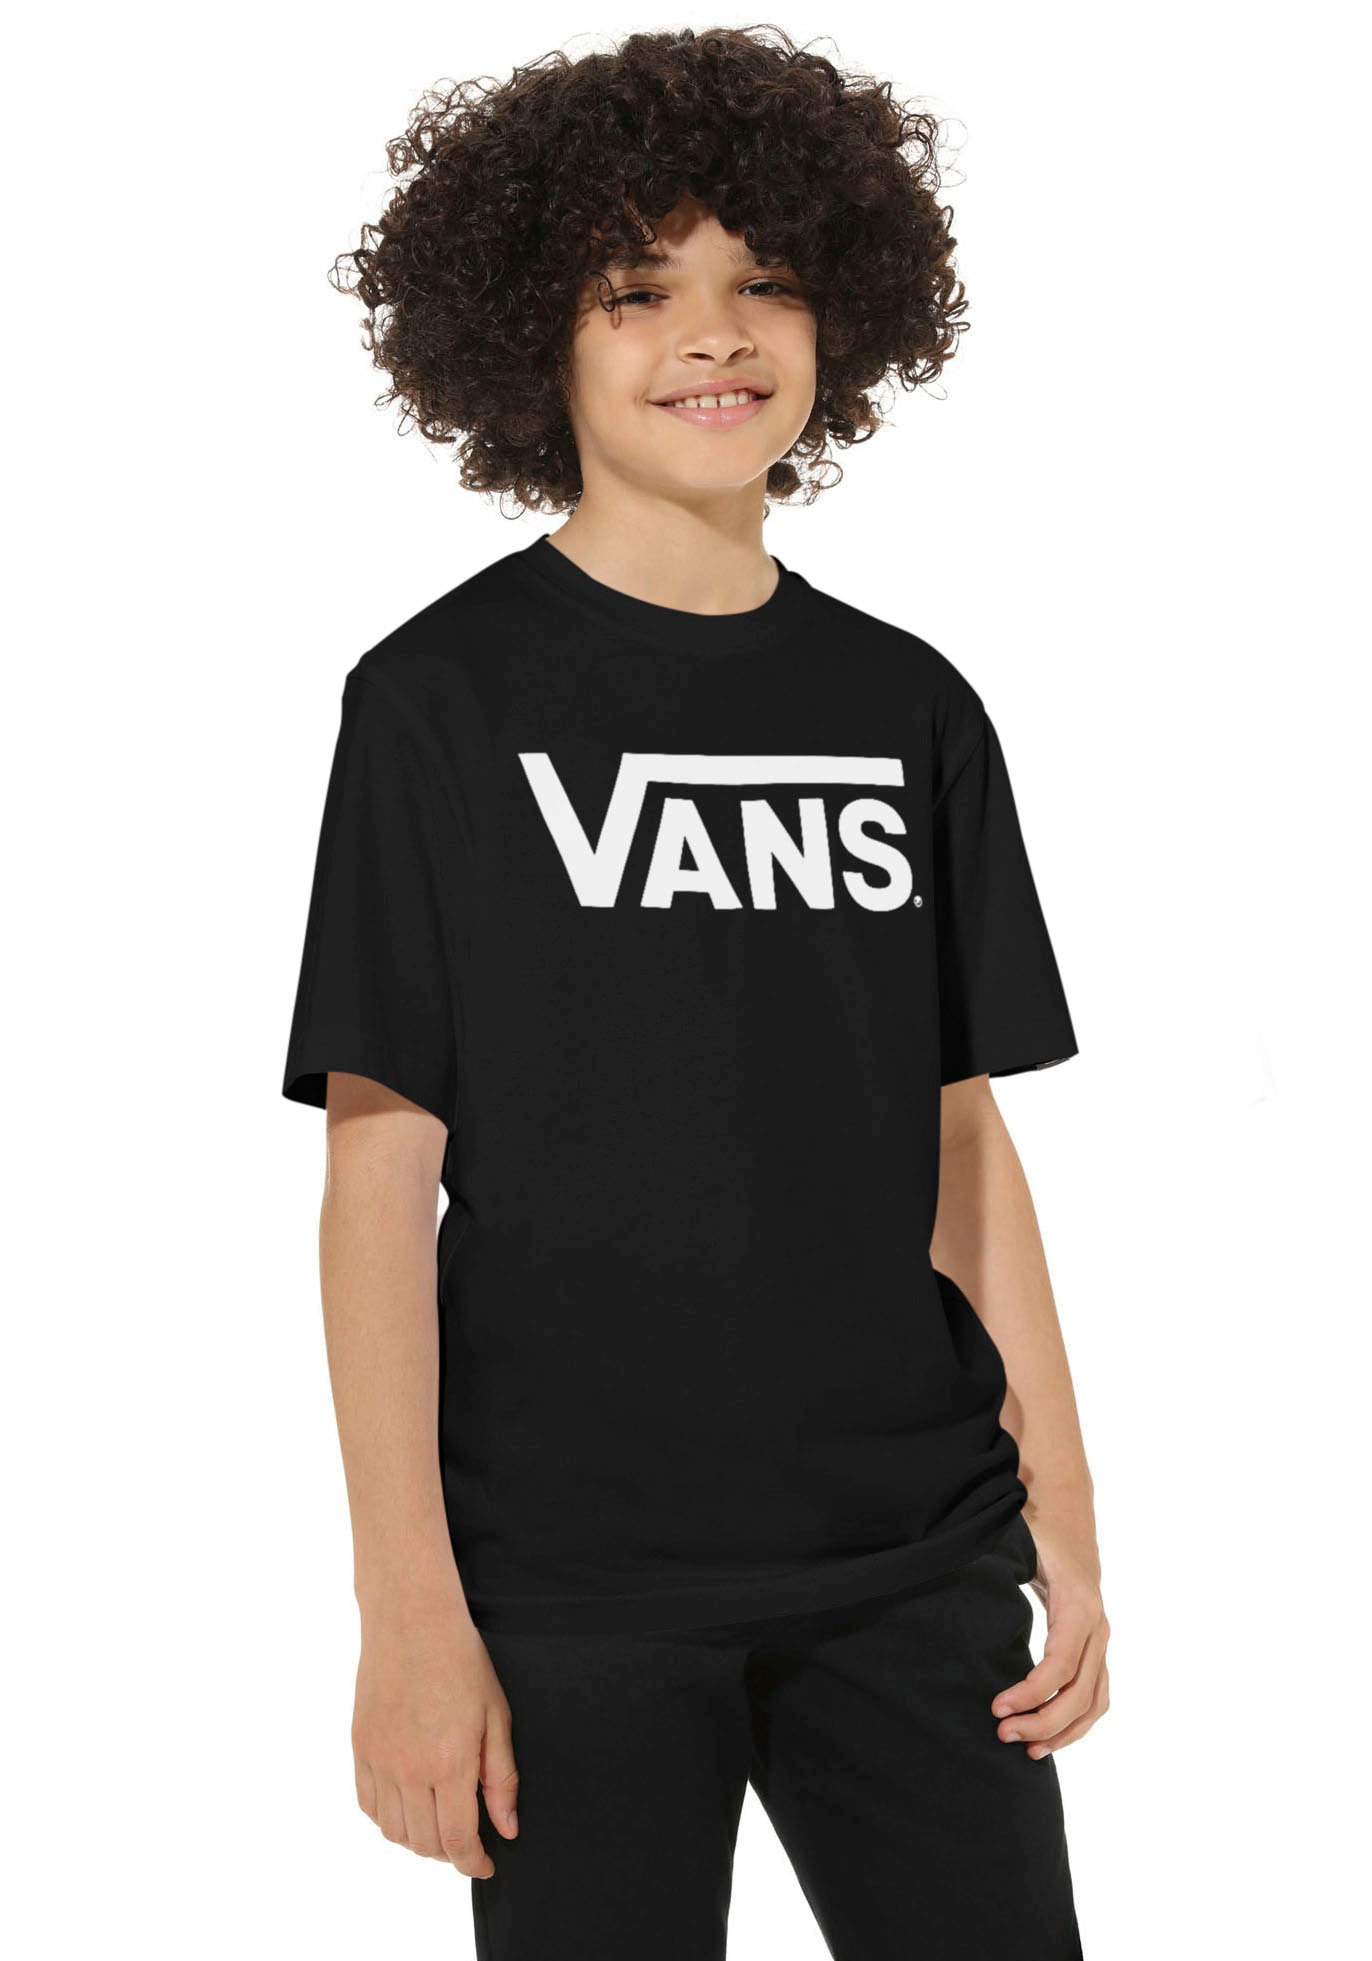 Vans »VANS T-Shirt CLASSIC %Sale BOYS« im jetzt